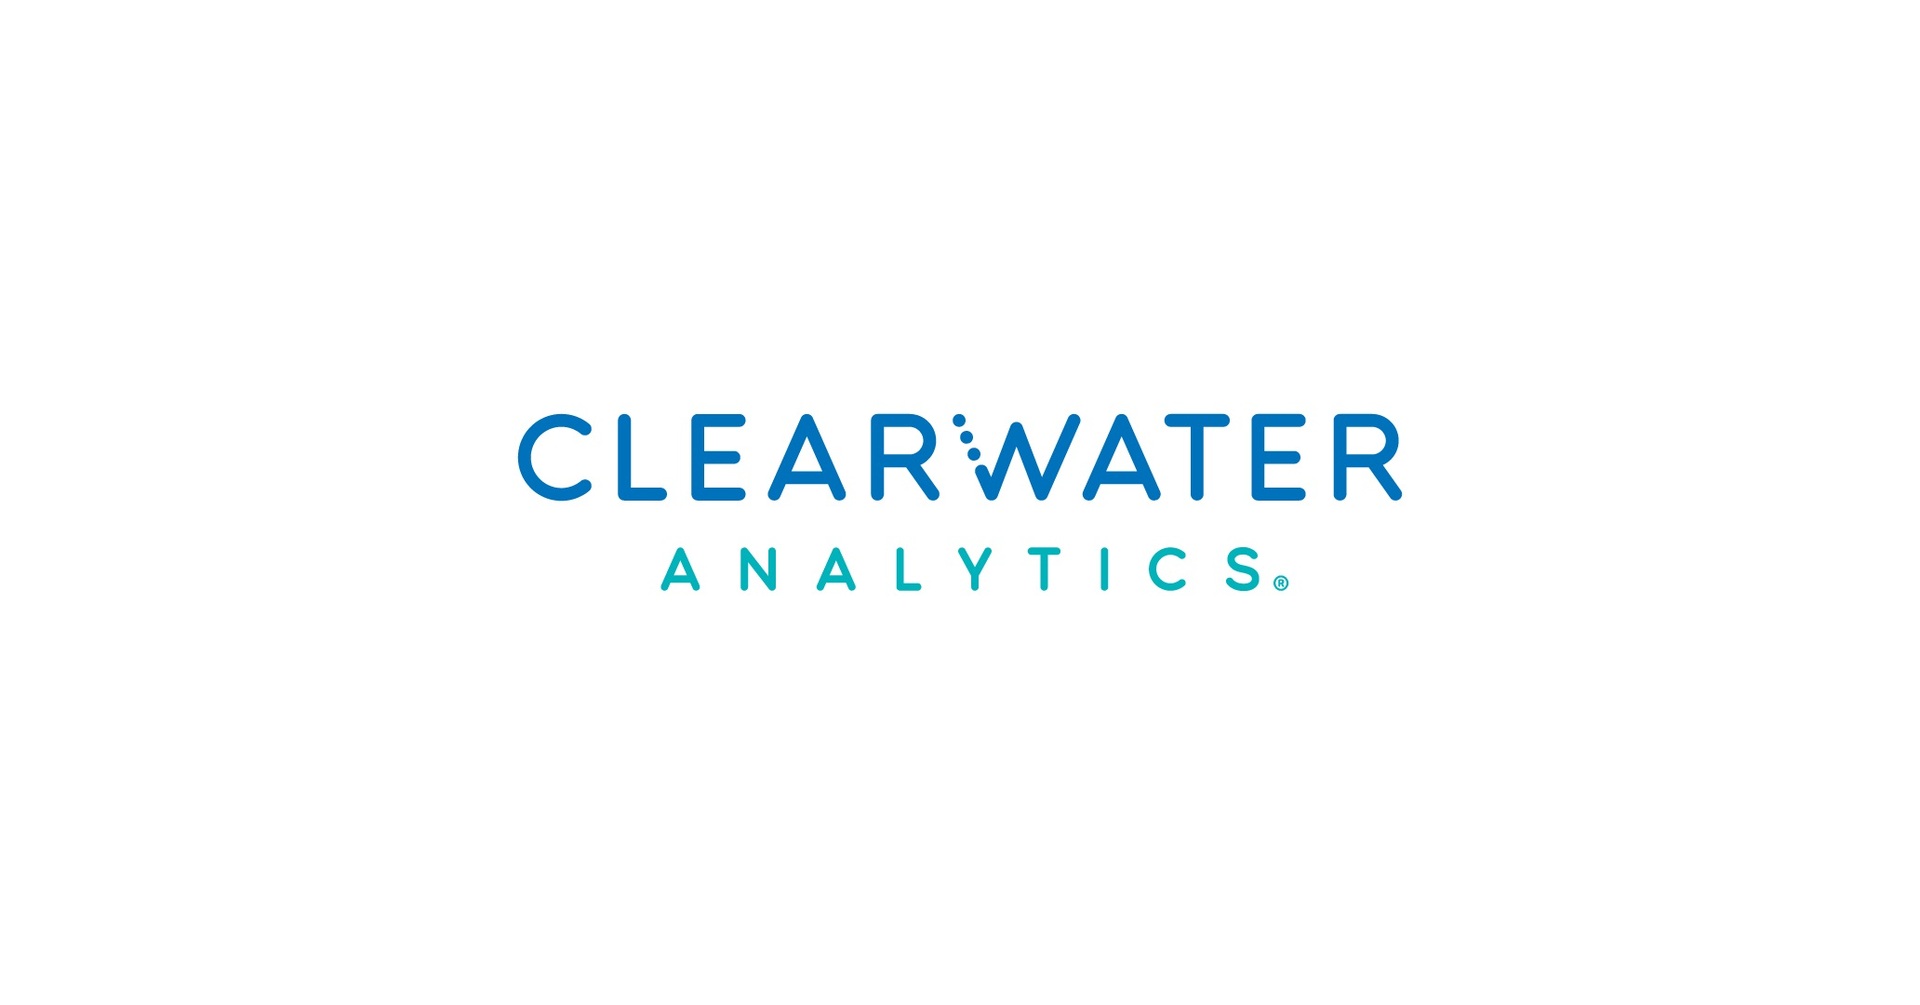 Erste资产管理公司选择Clearwater Analytics帮助支持业务增长